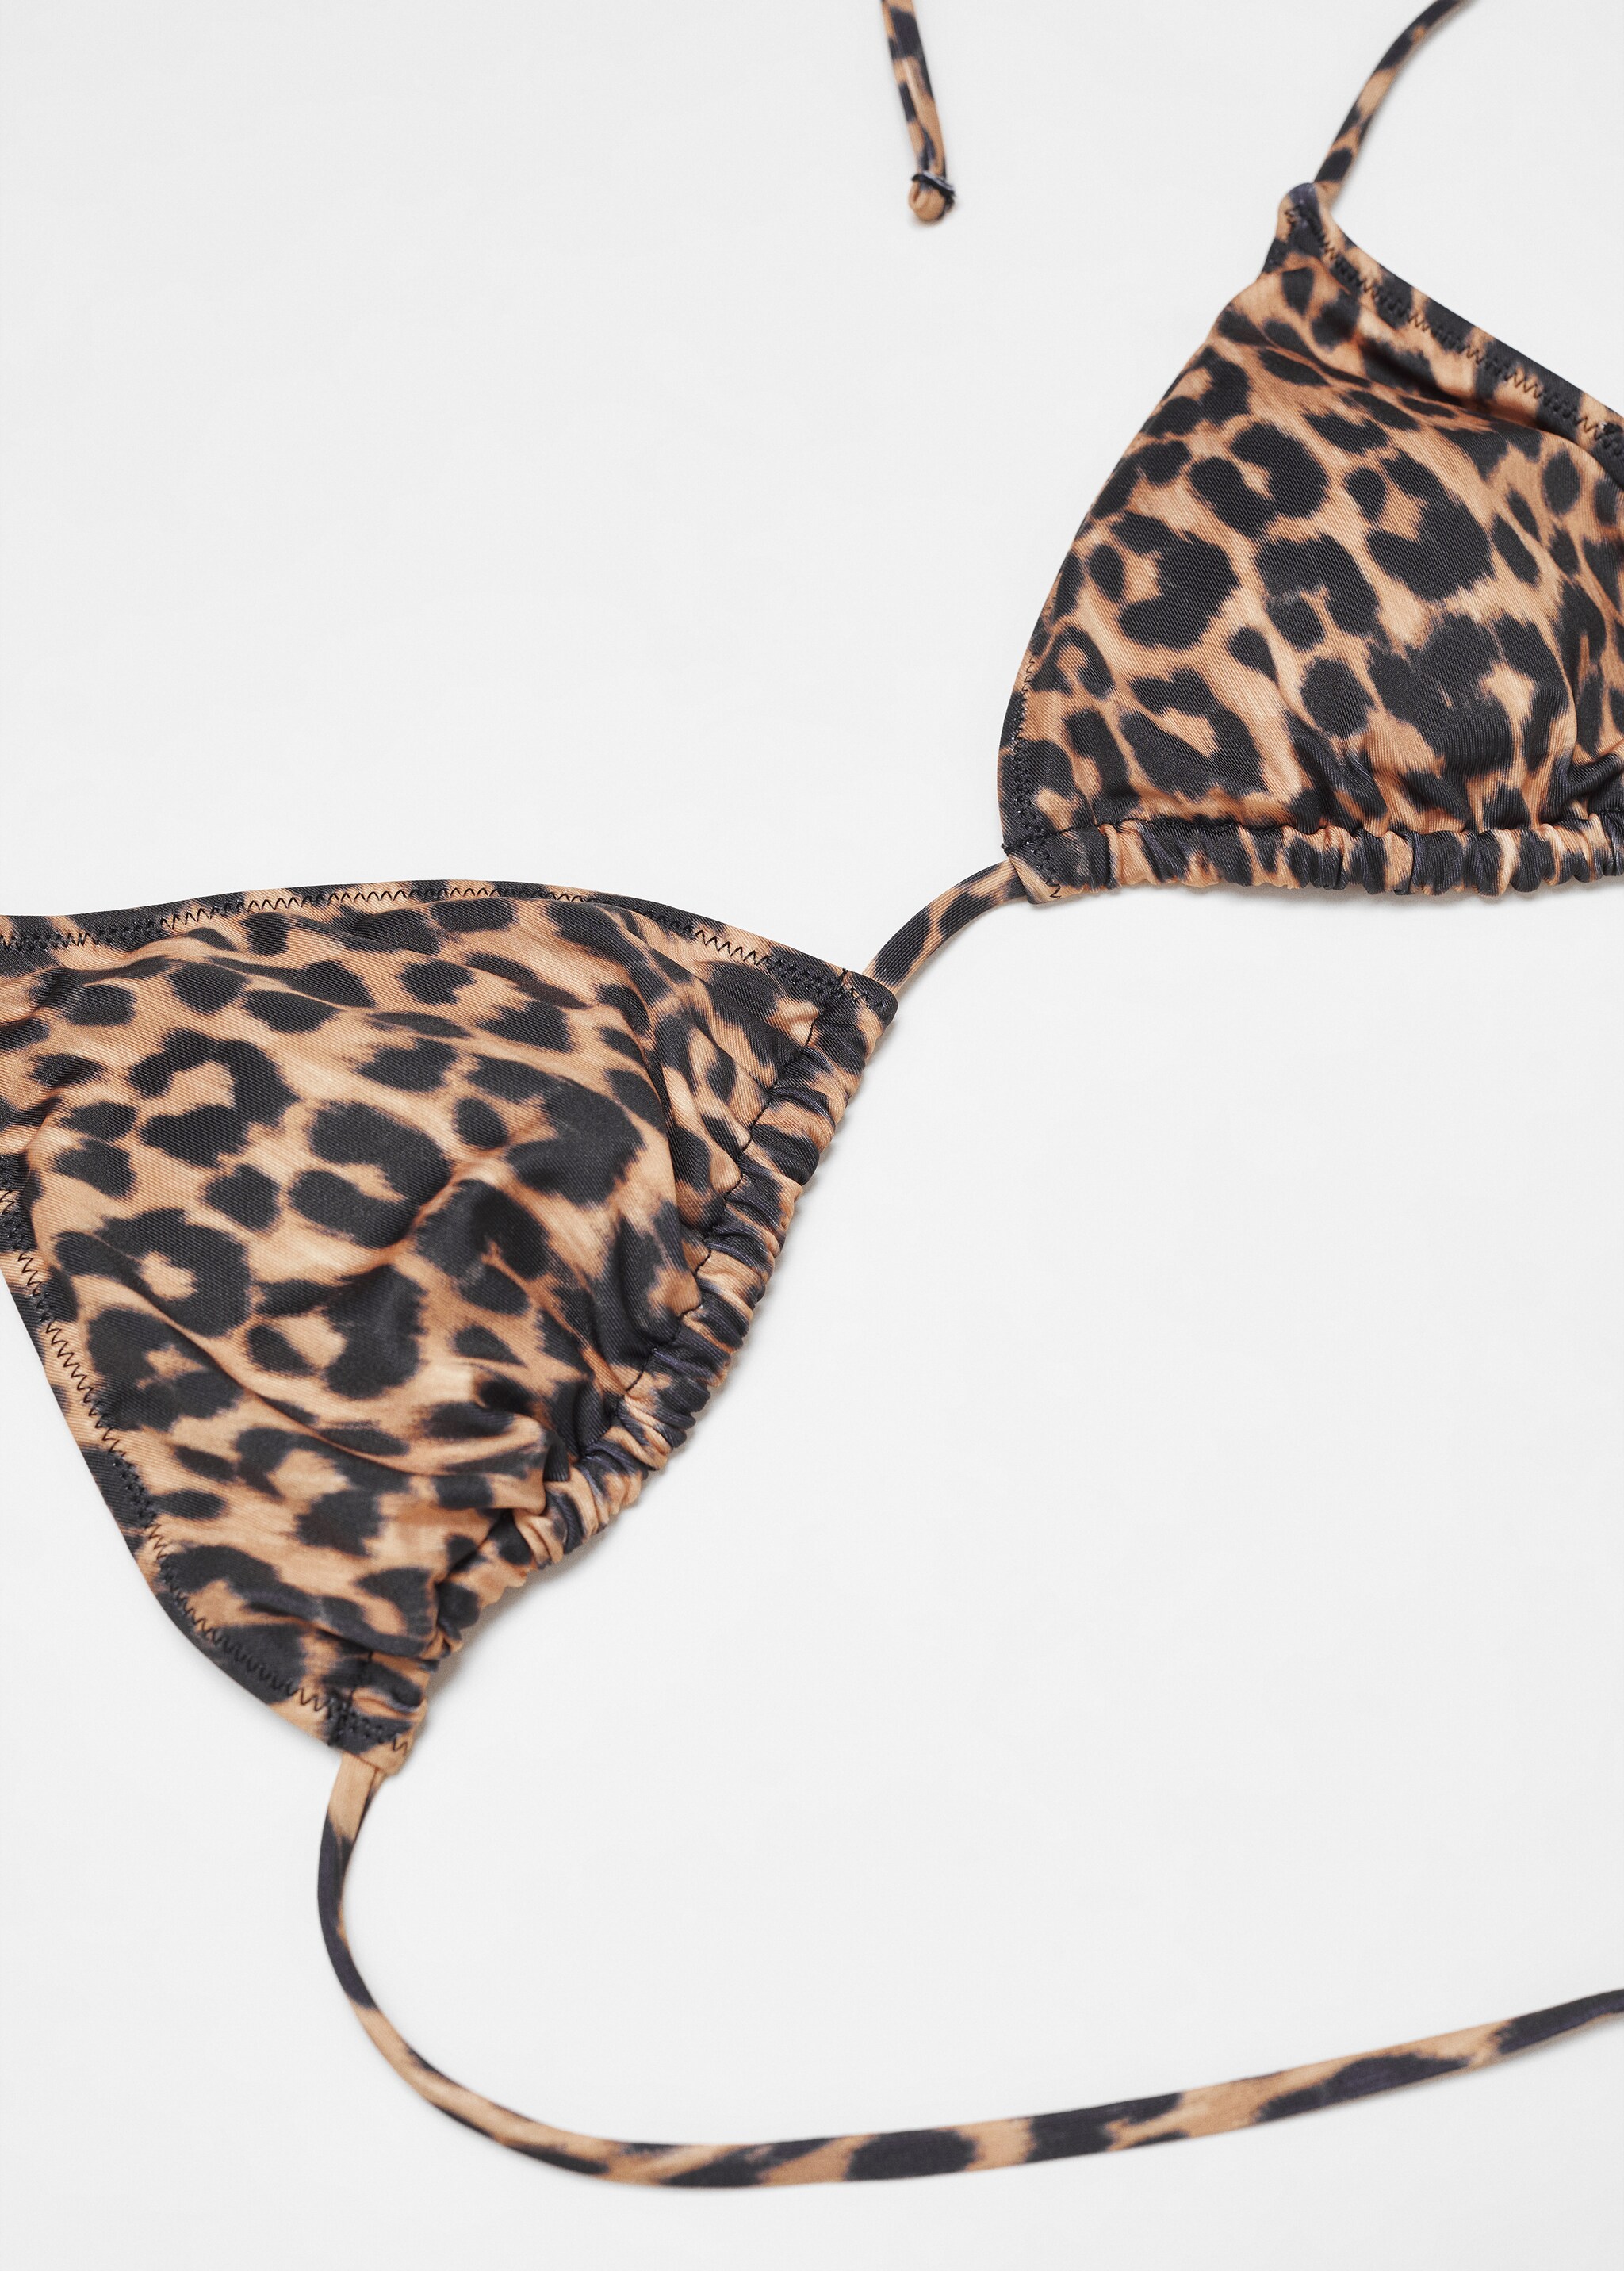 Leopard bikini top - Details of the article 8